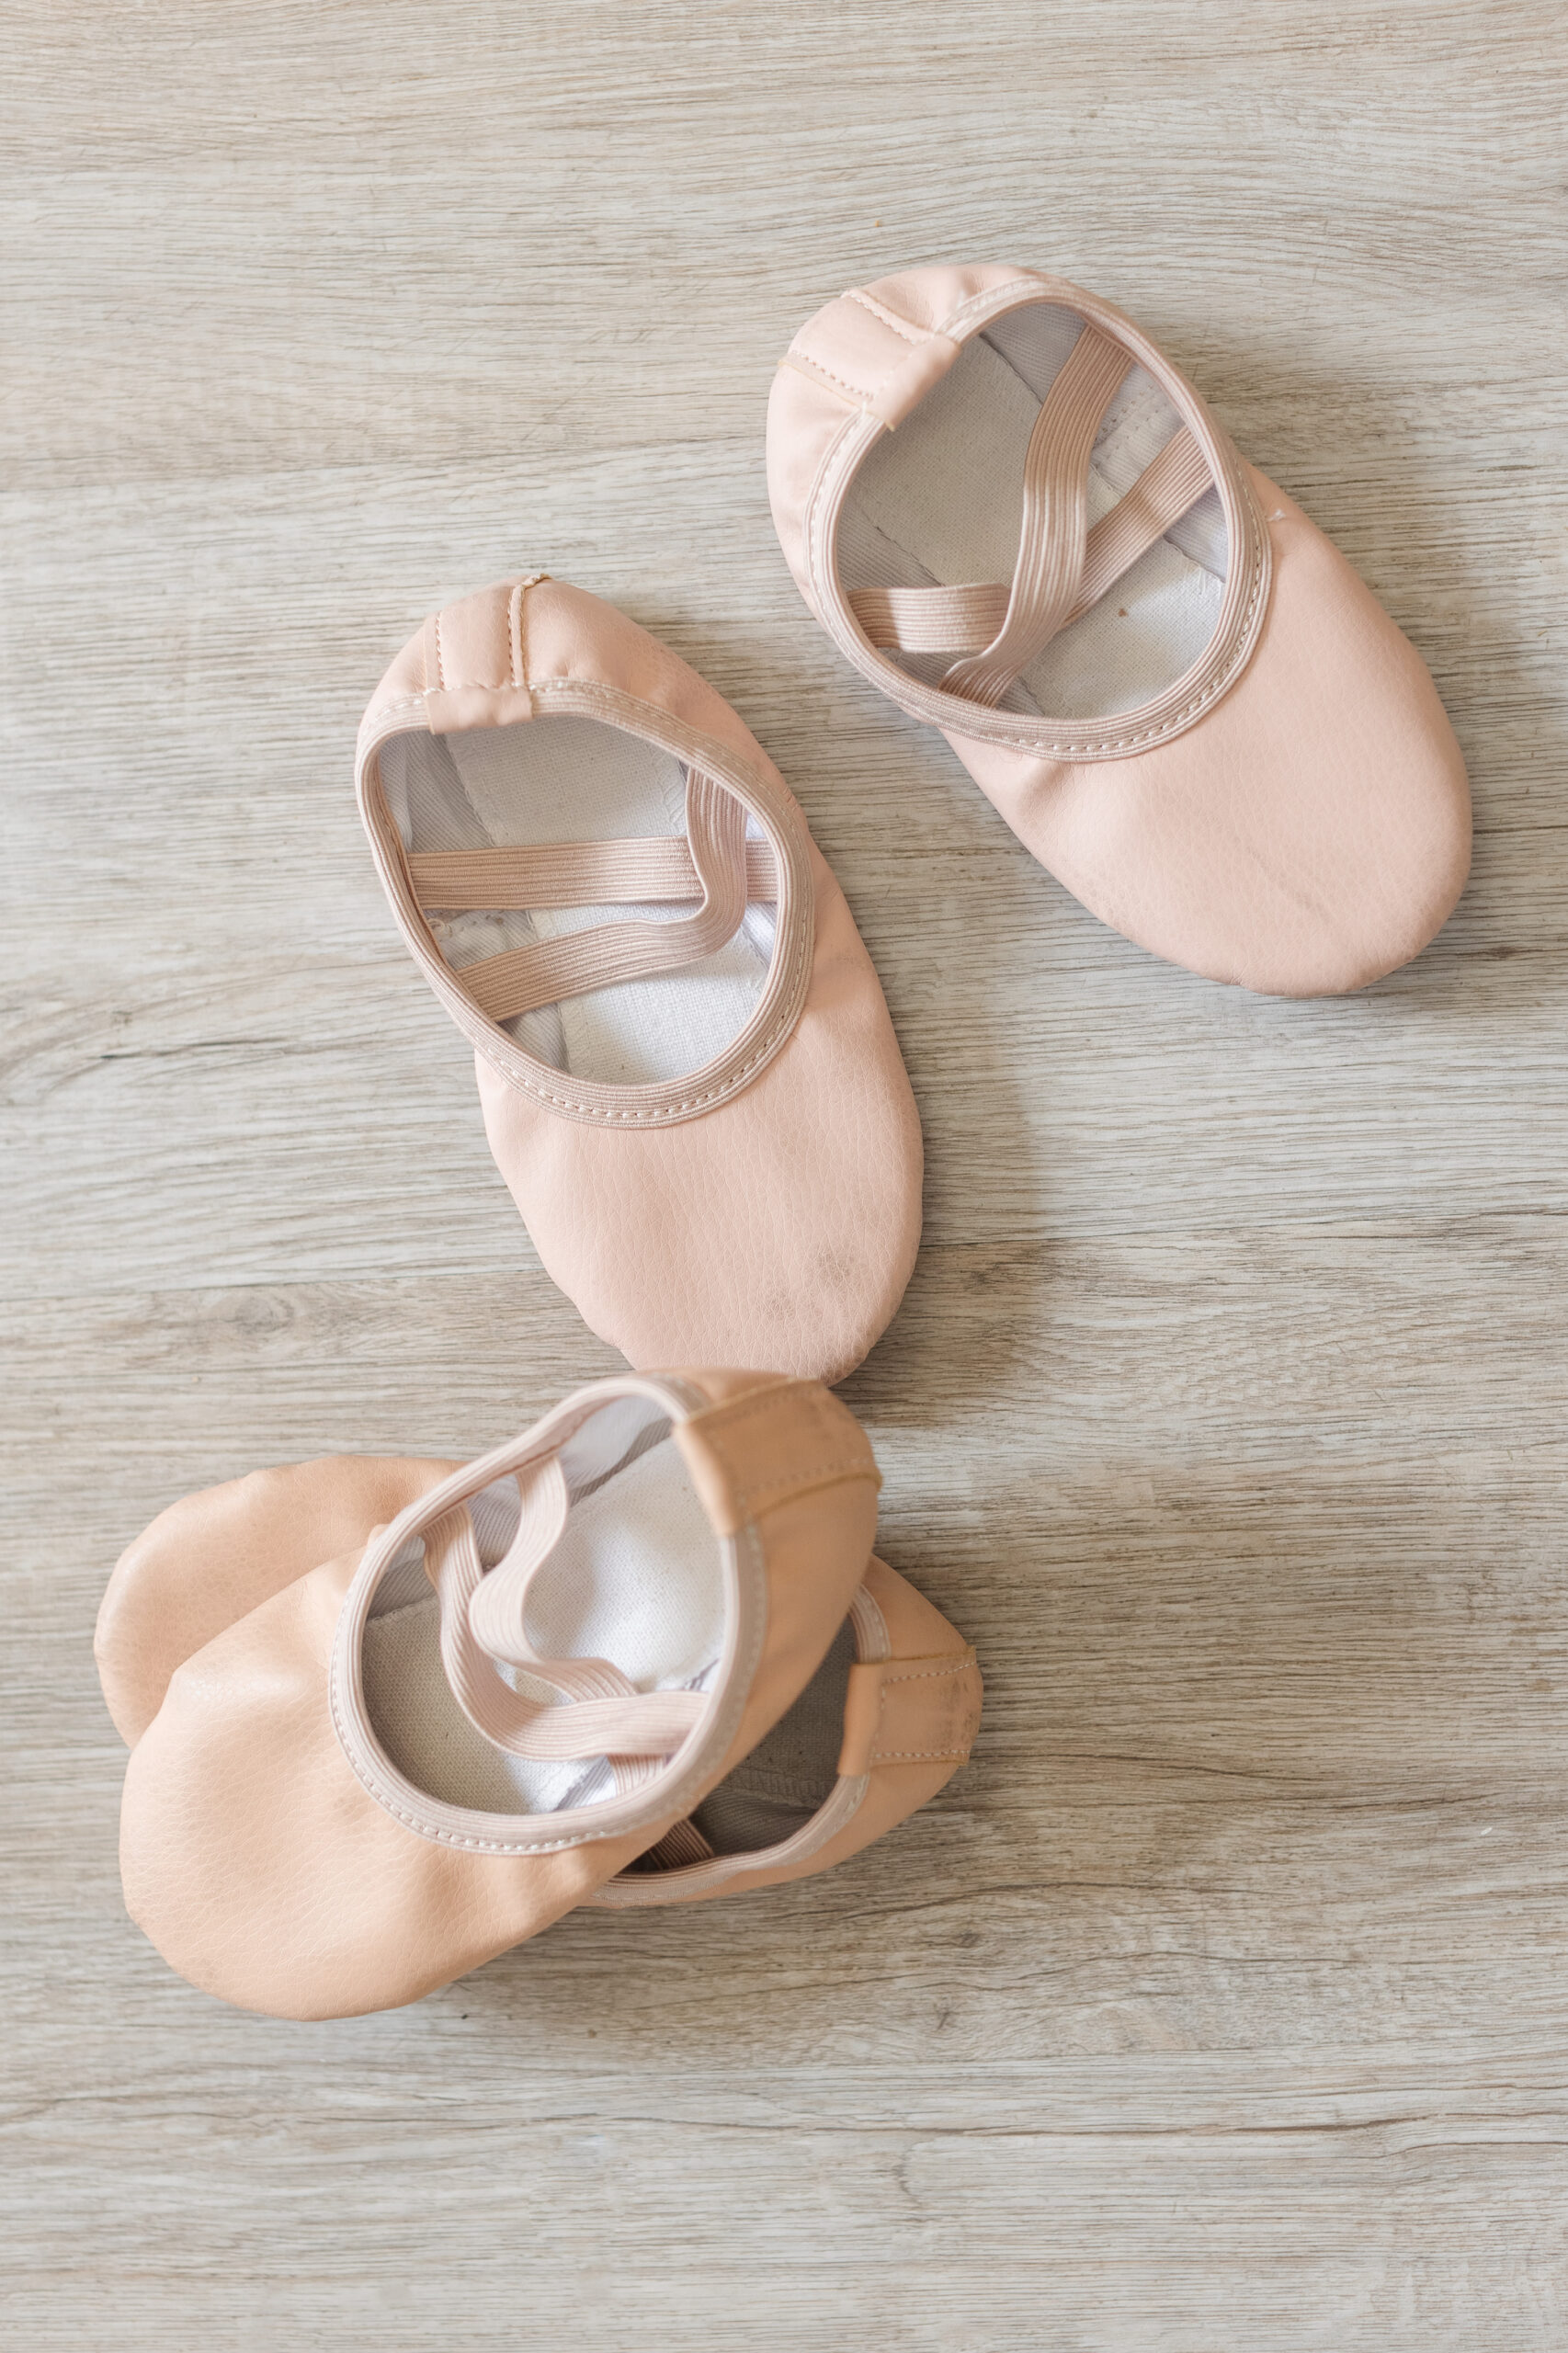 Tiny ballet shoes arranged adorably 